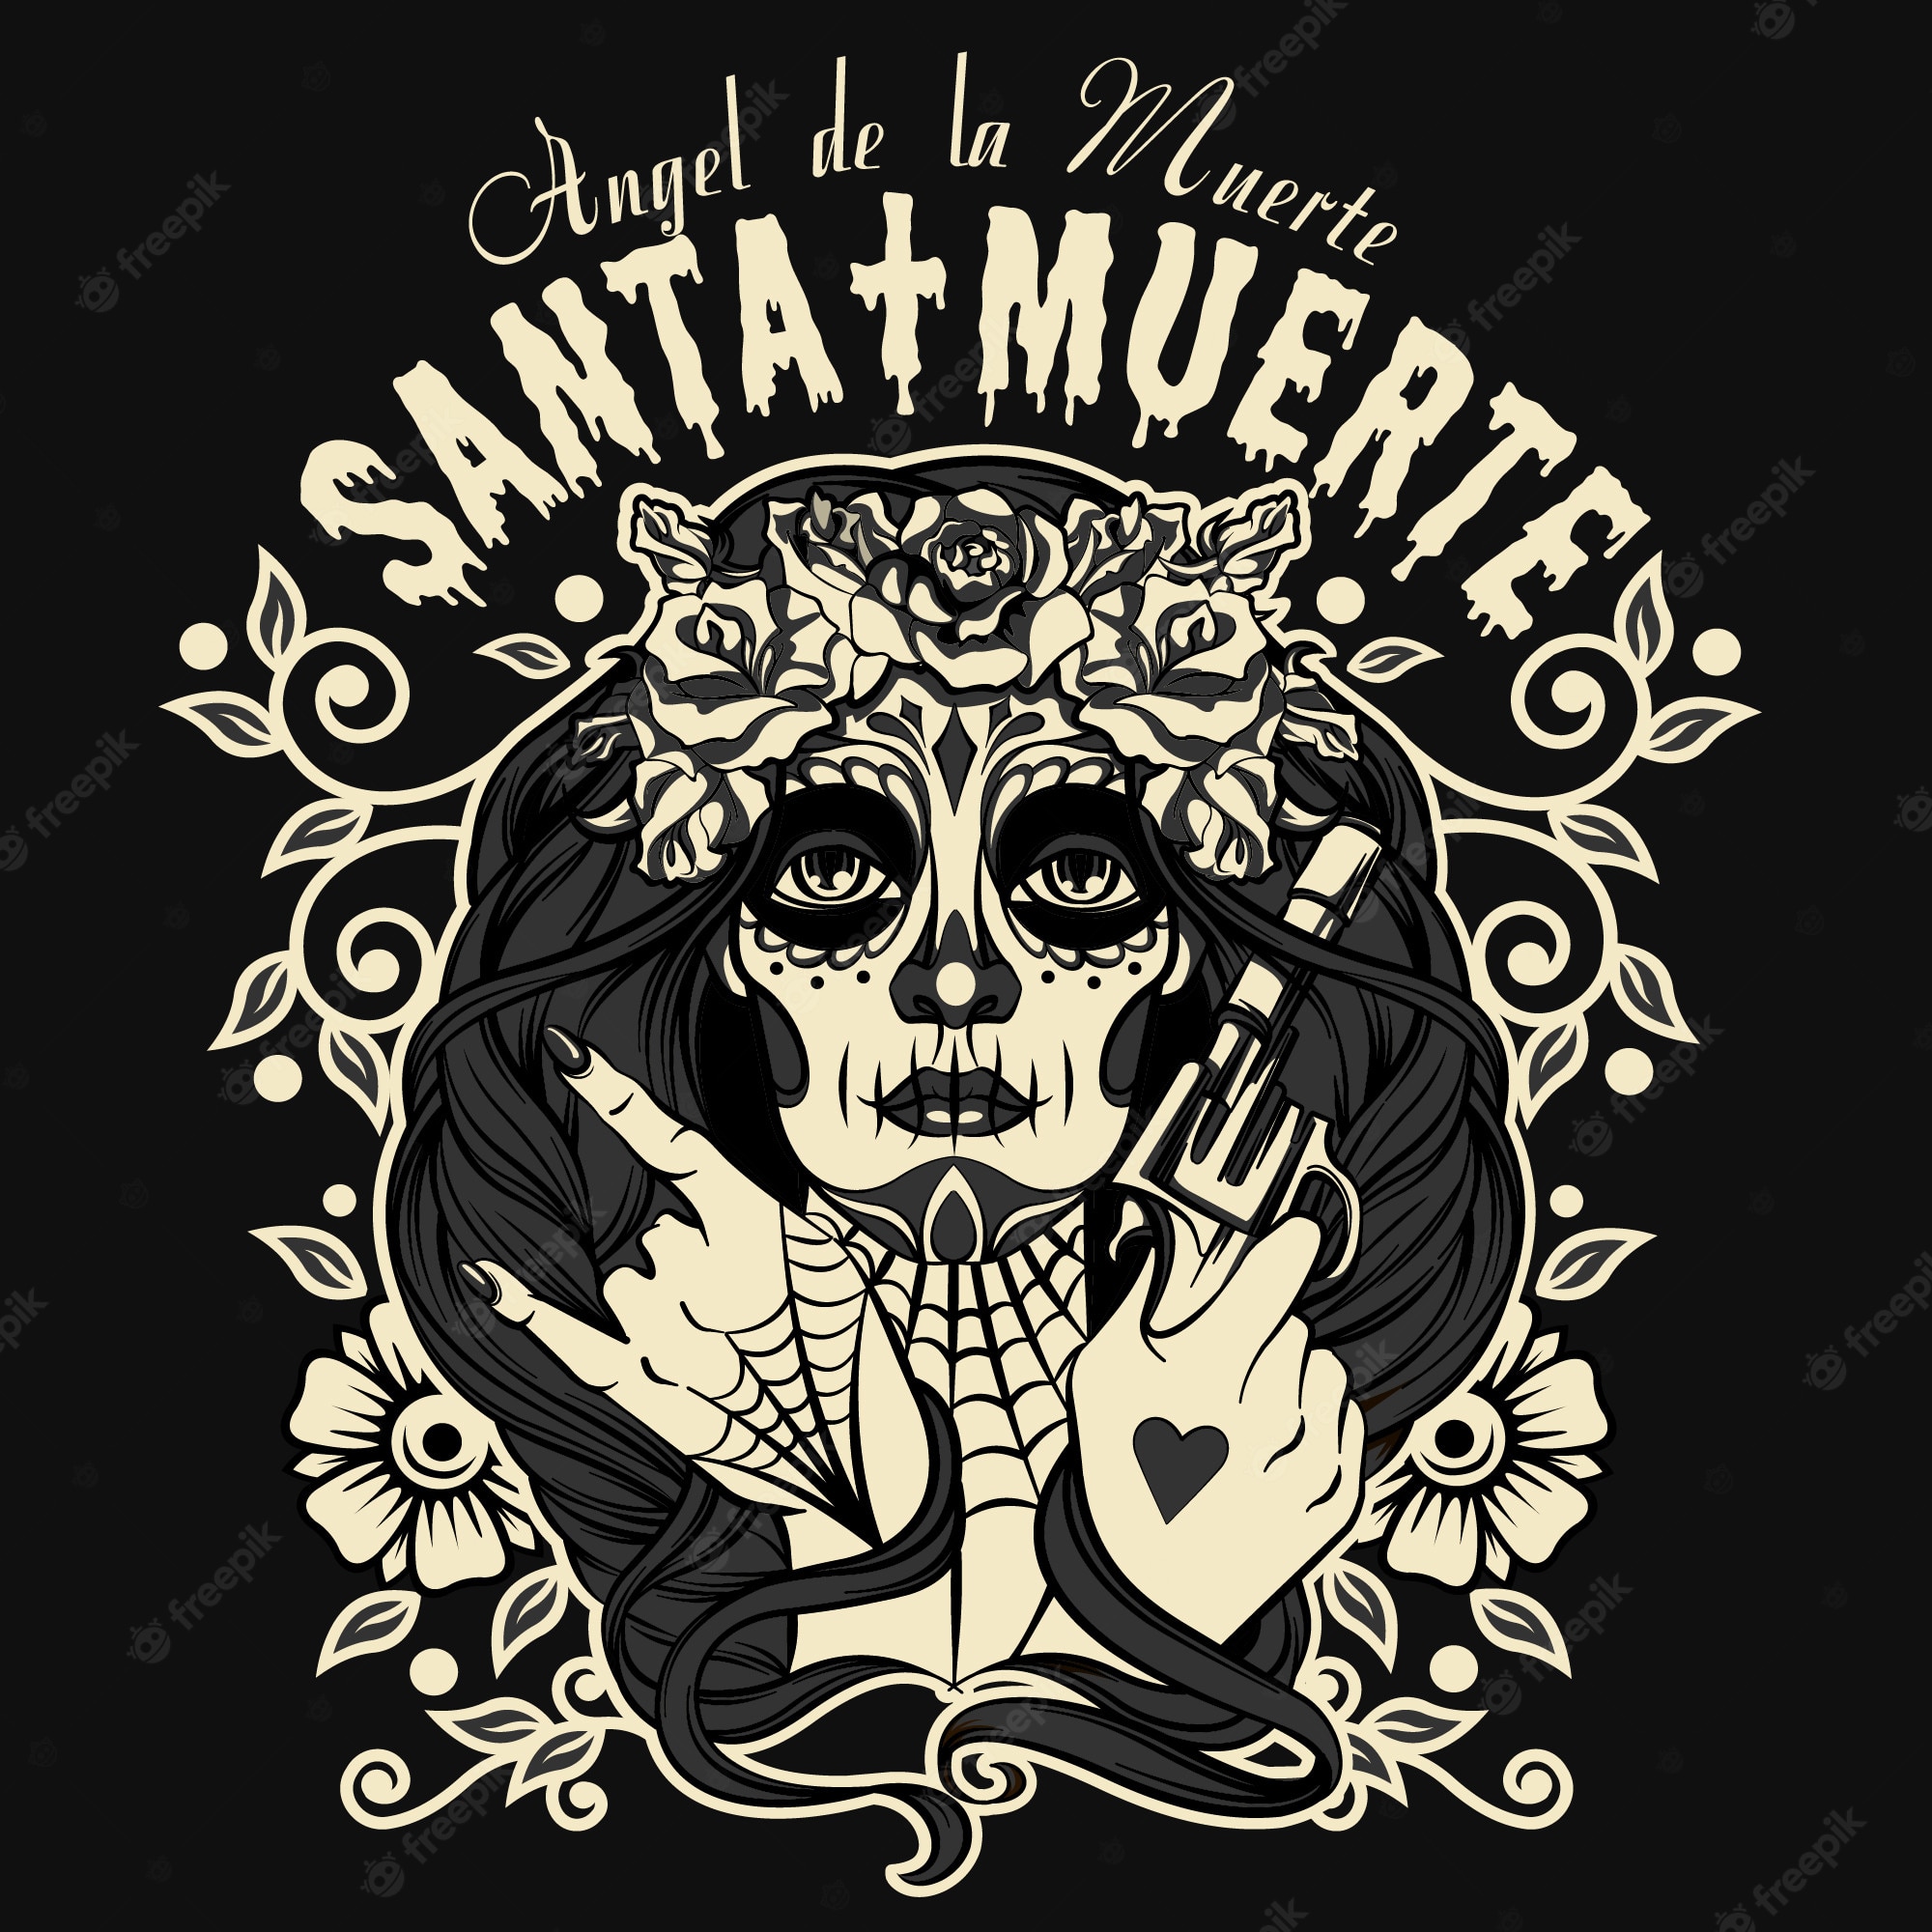 Santa muerte Vectors & Illustrations for Free Download